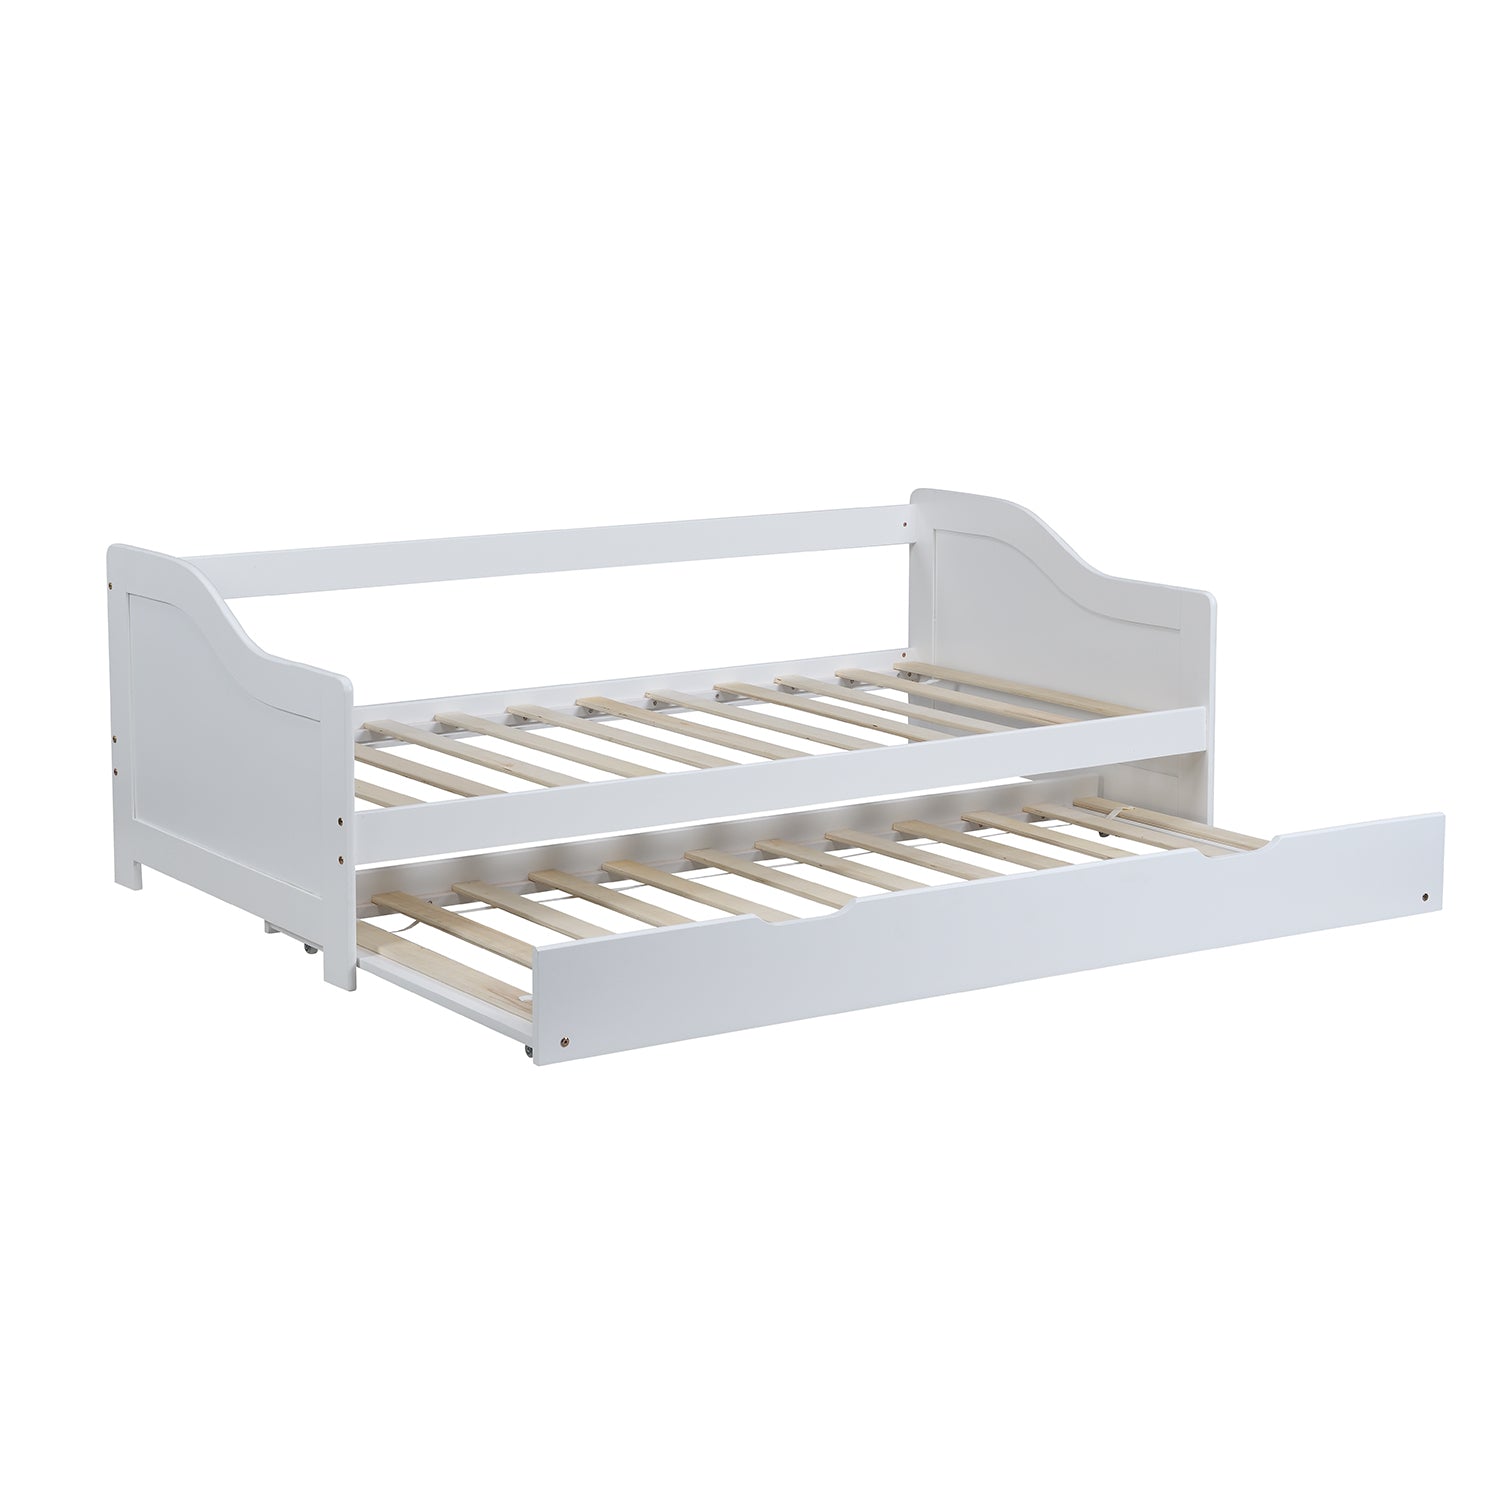 Benton FSC Certified Solid Wood Day Bed with Trundle | Shop Designer ...